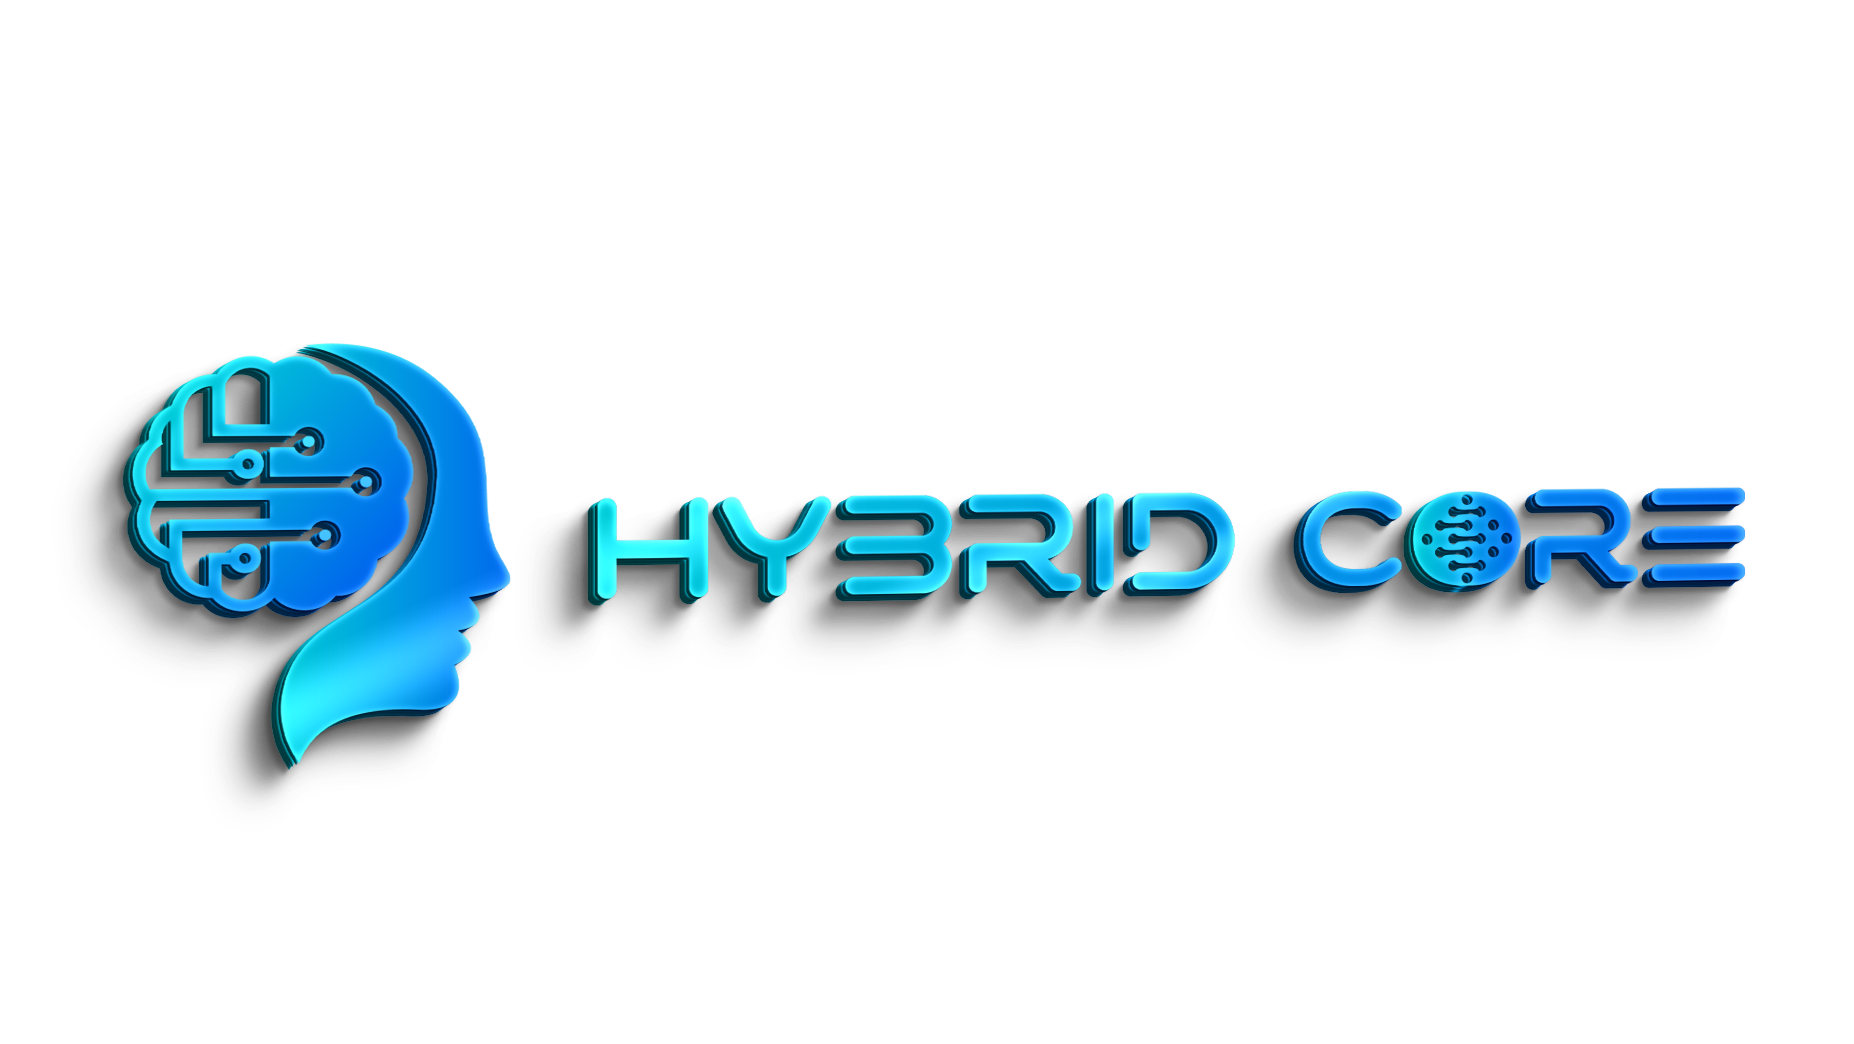 Hybrid Core 